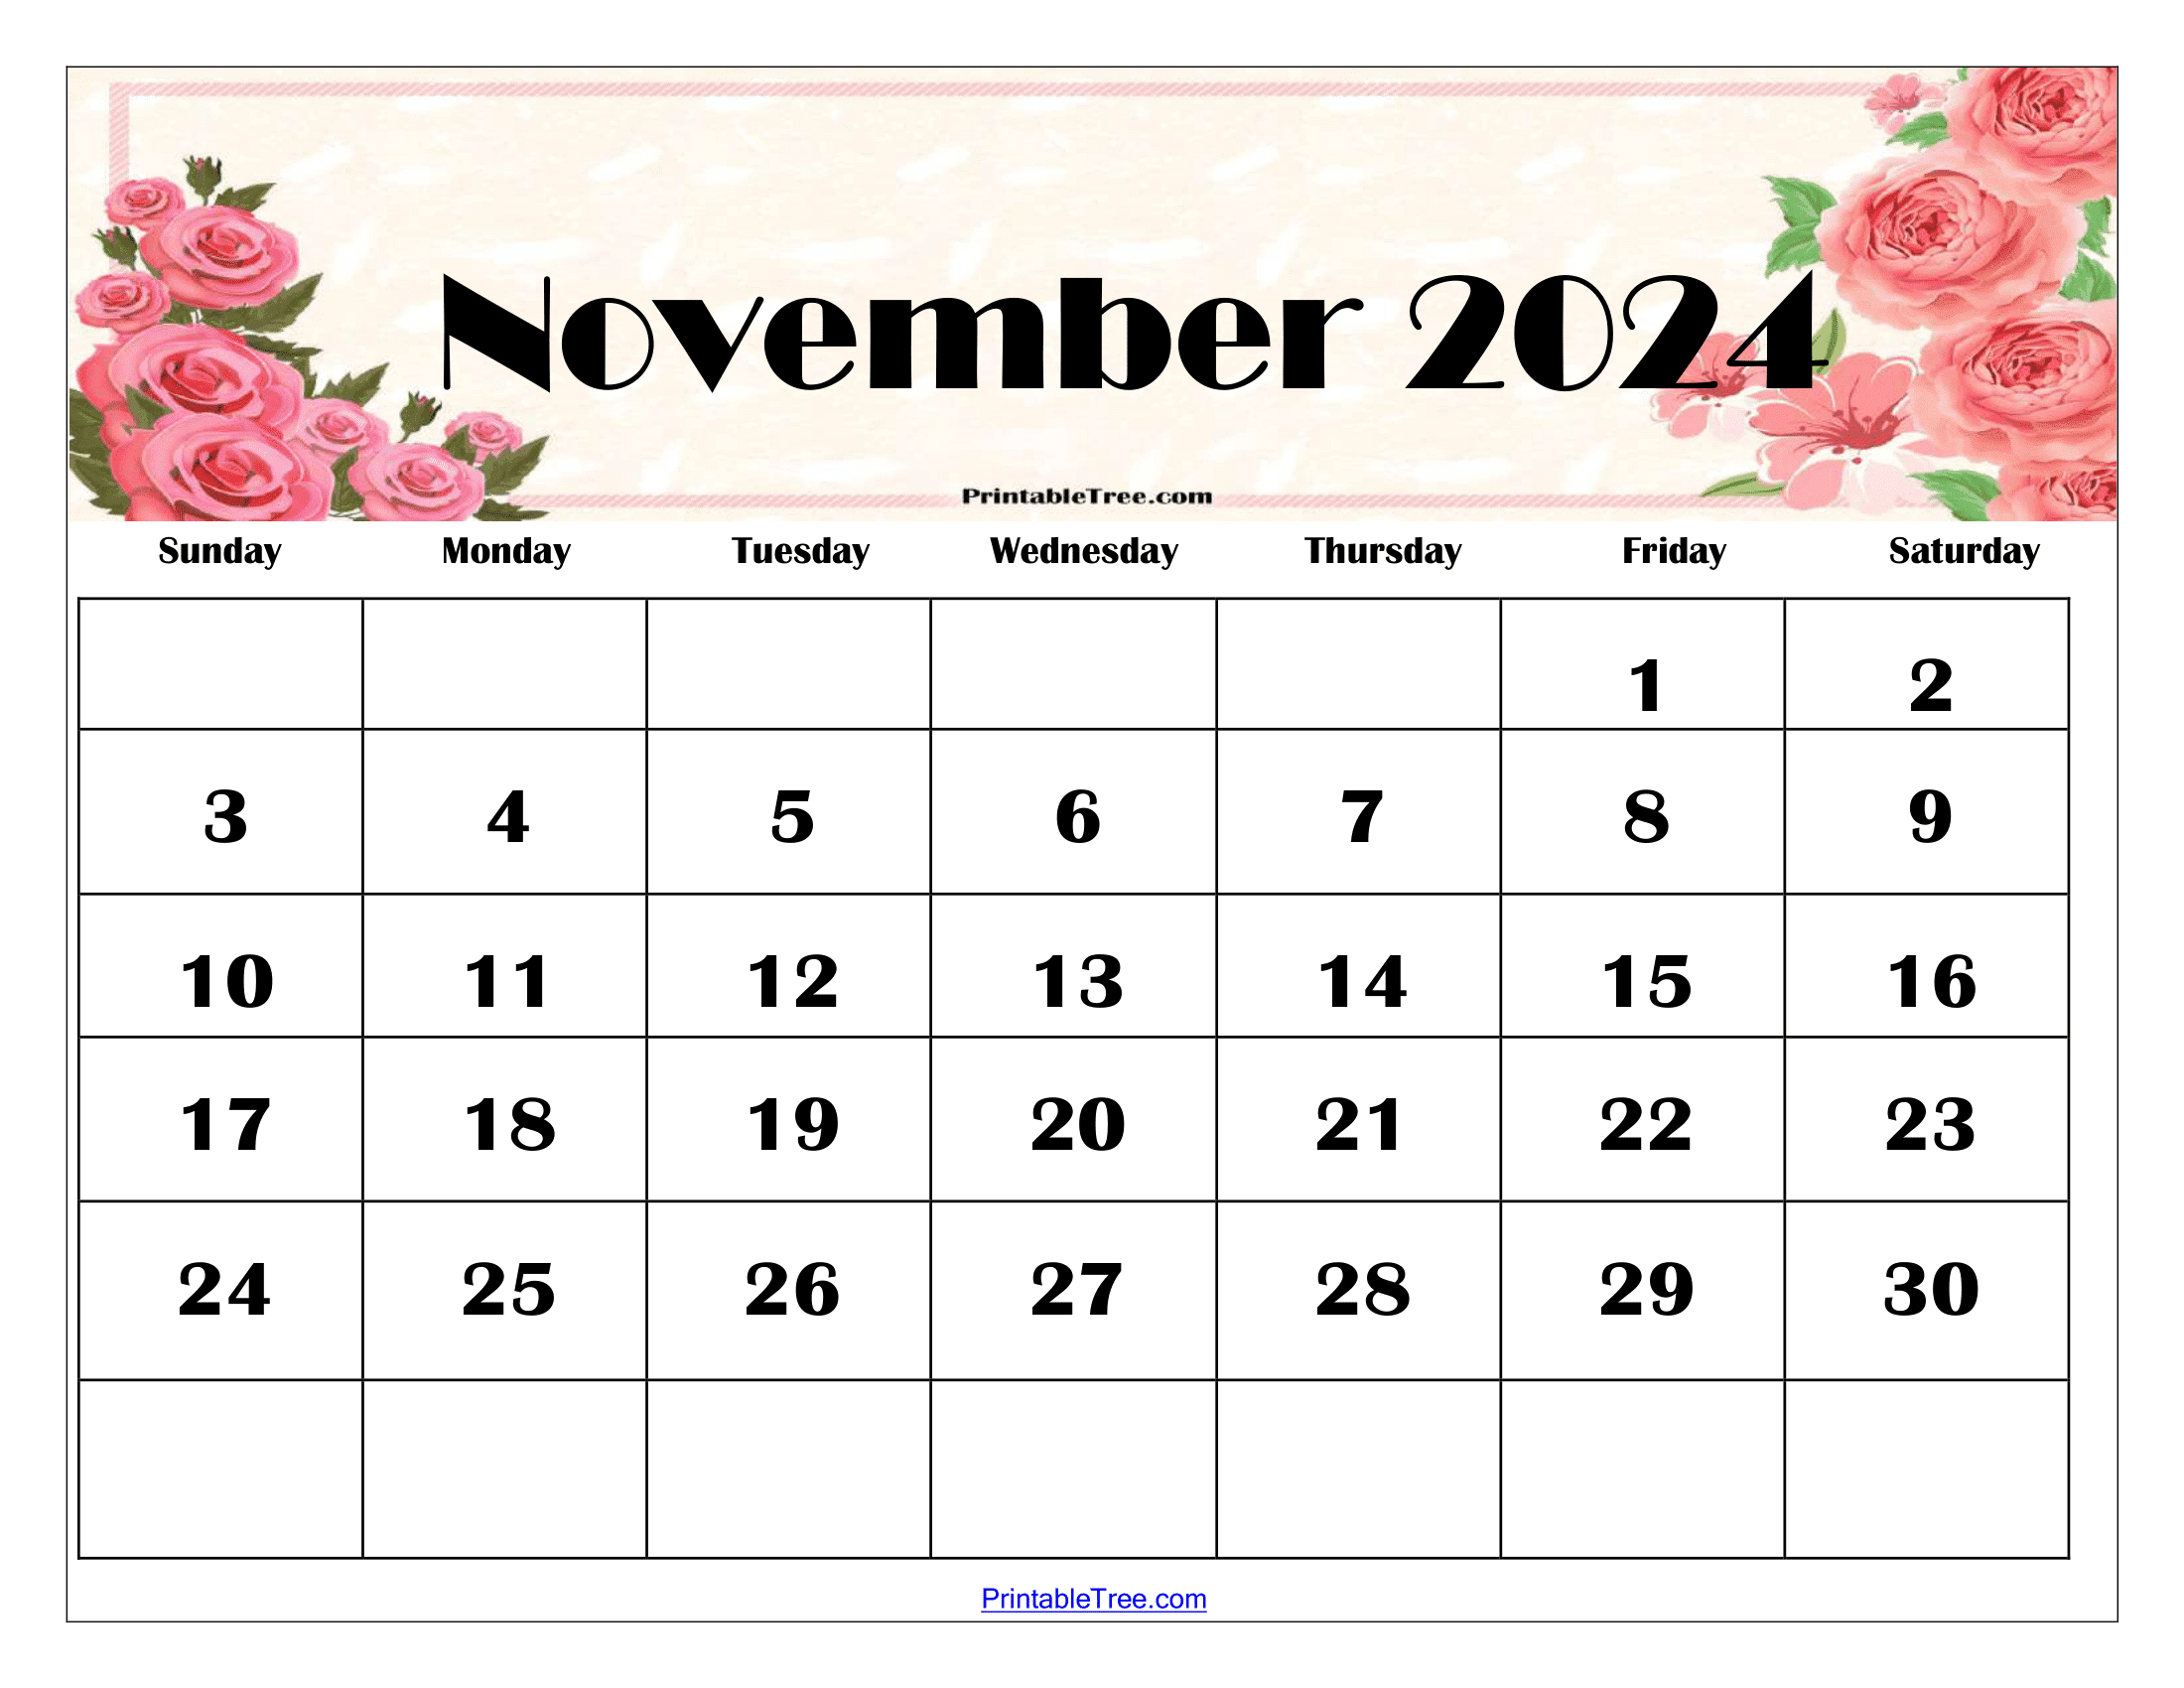 November 2024 Calendar Printable Pdf Template With Holidays inside Free Printable Calendar 2024 November December Christmas